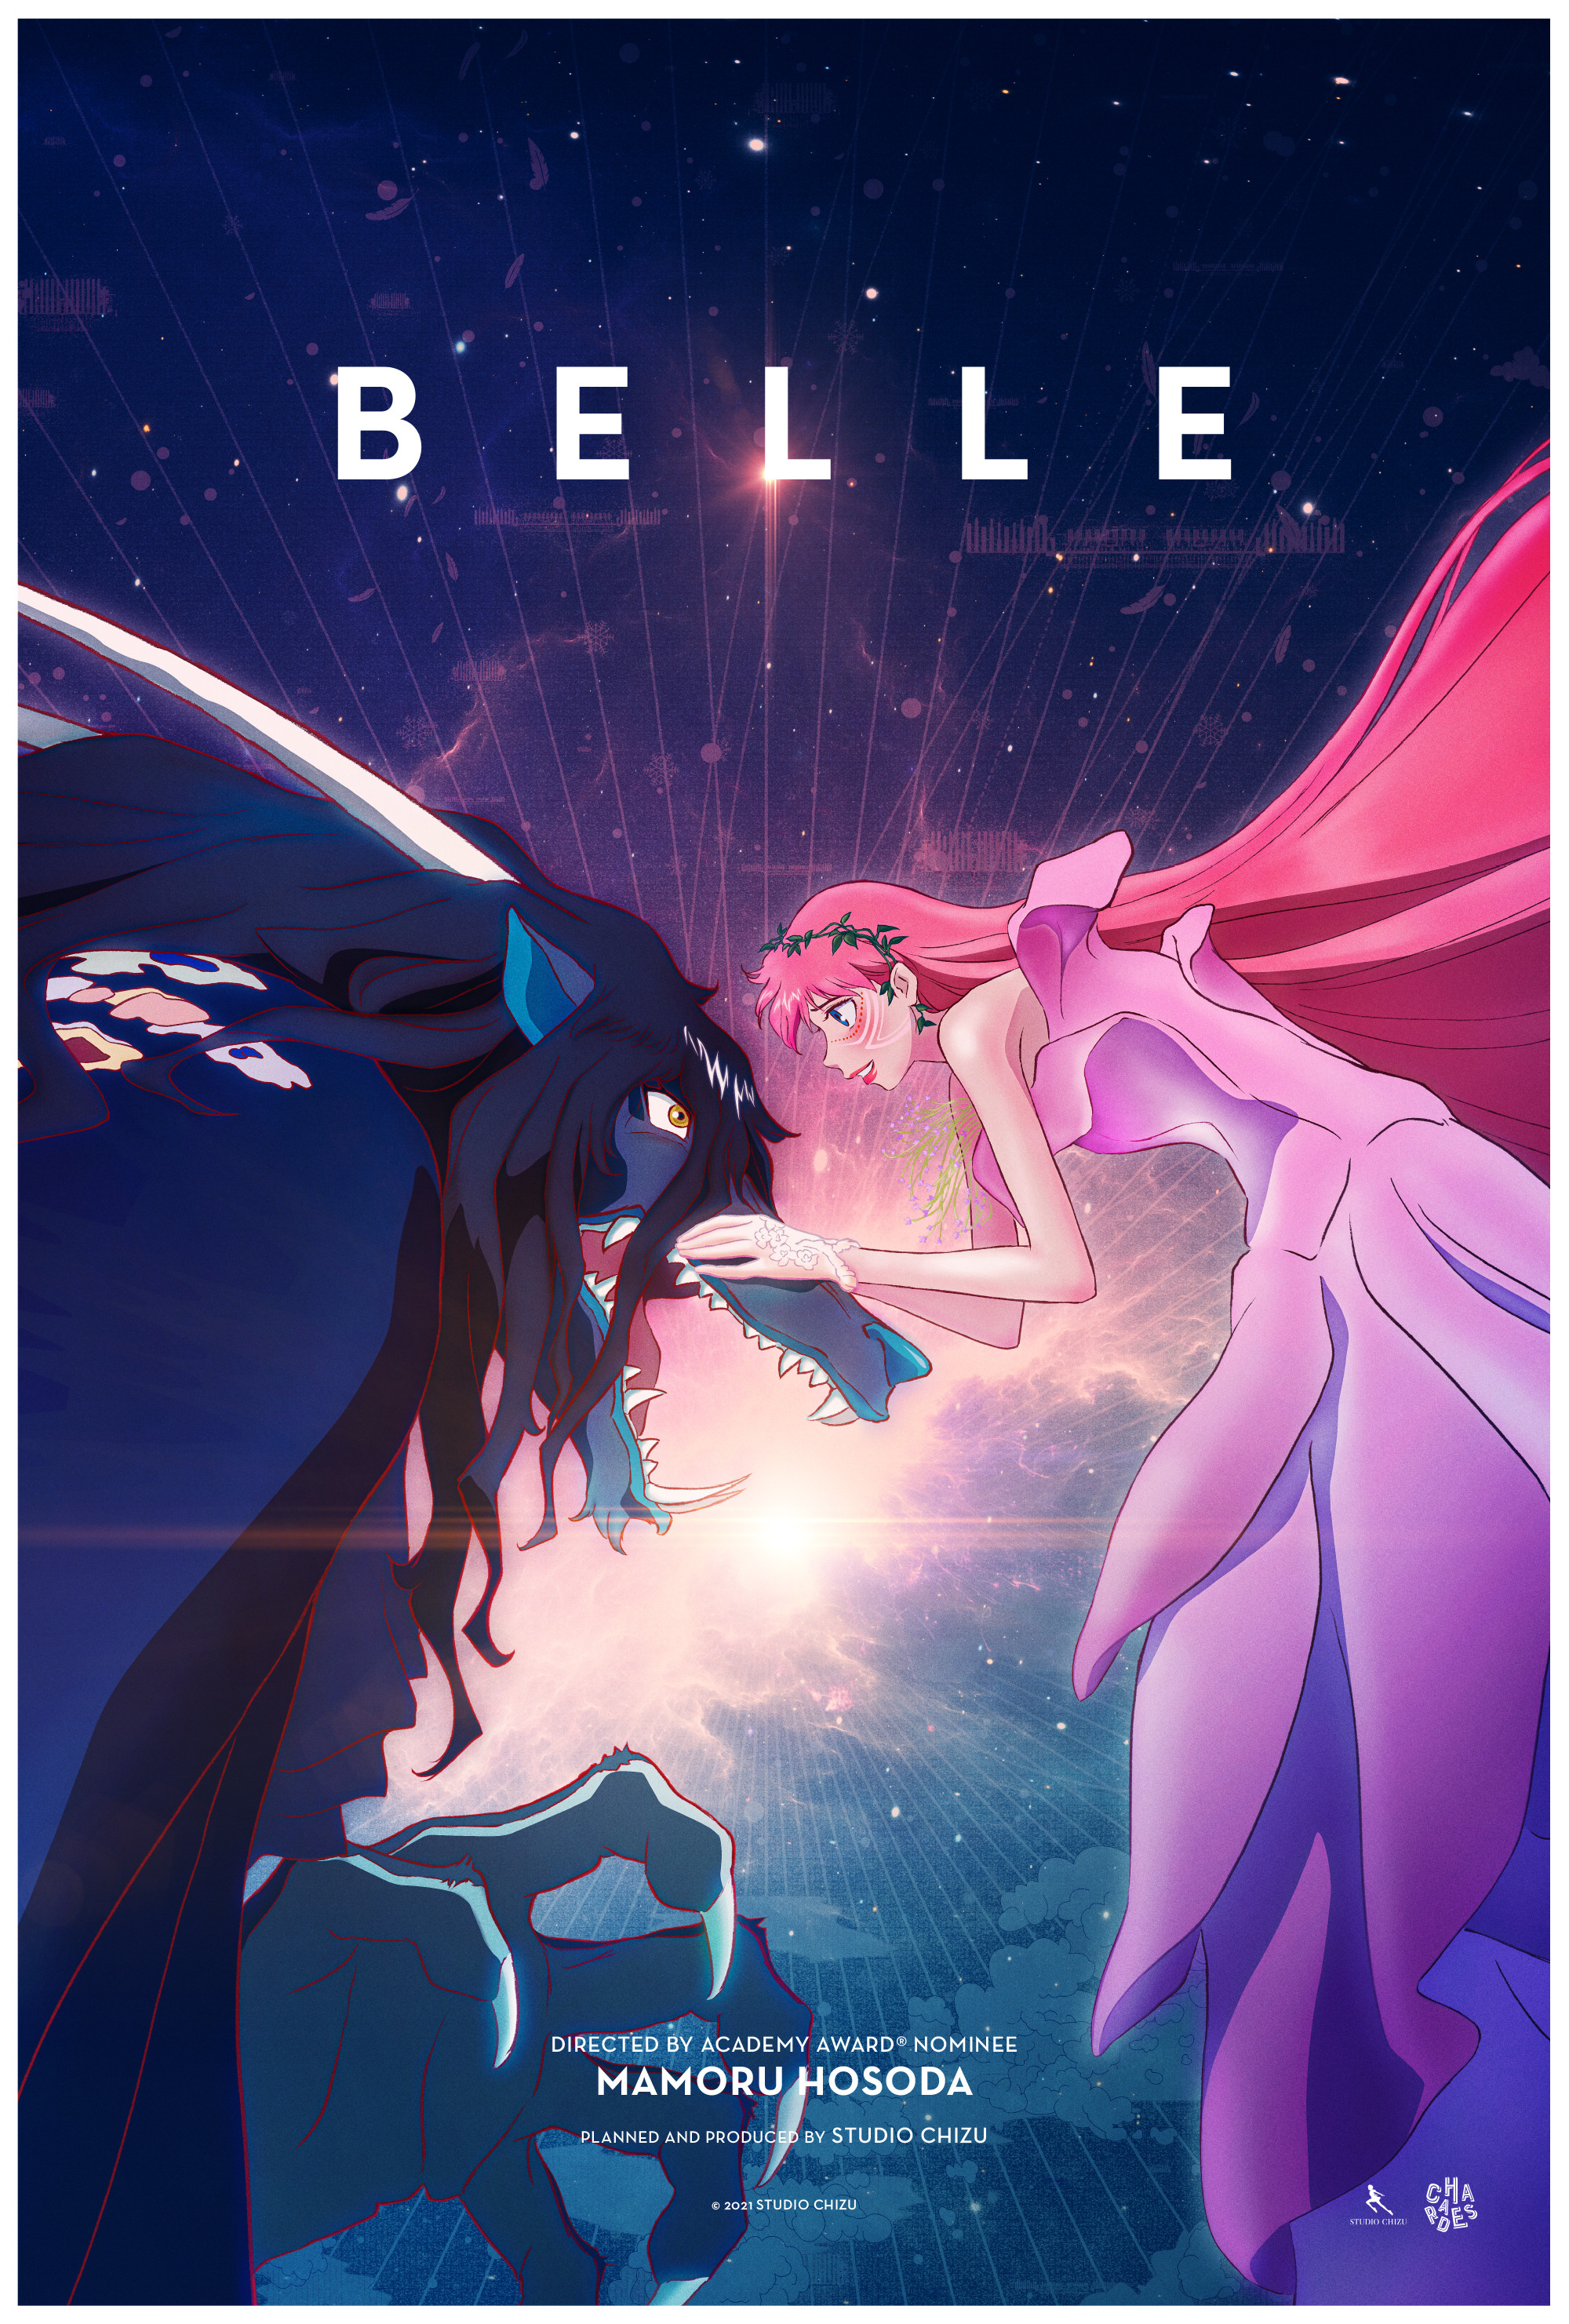 Mega Sized Movie Poster Image for Belle: Ryu to Sobakasu no Hime (#2 of 4)